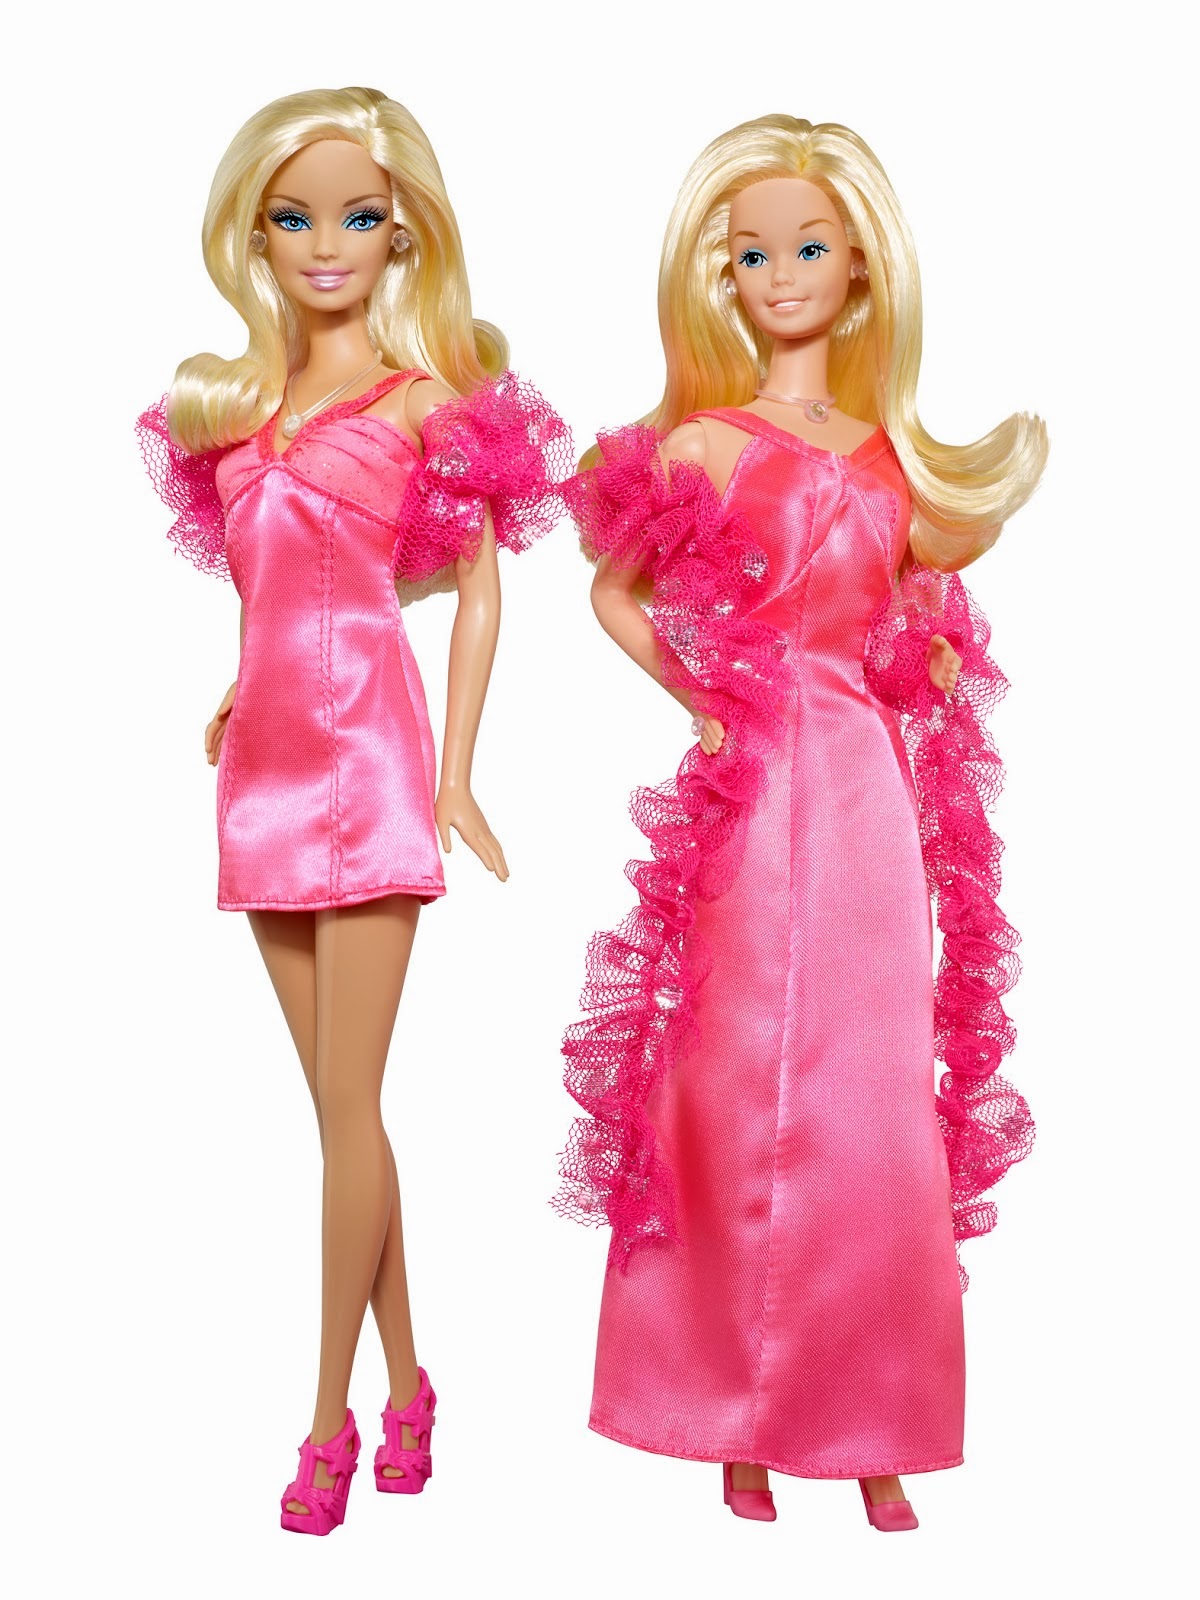 Gambar Wallpaper Barbie Doll Barbie Toy Pink Clothing 631097 Wallpaperuse